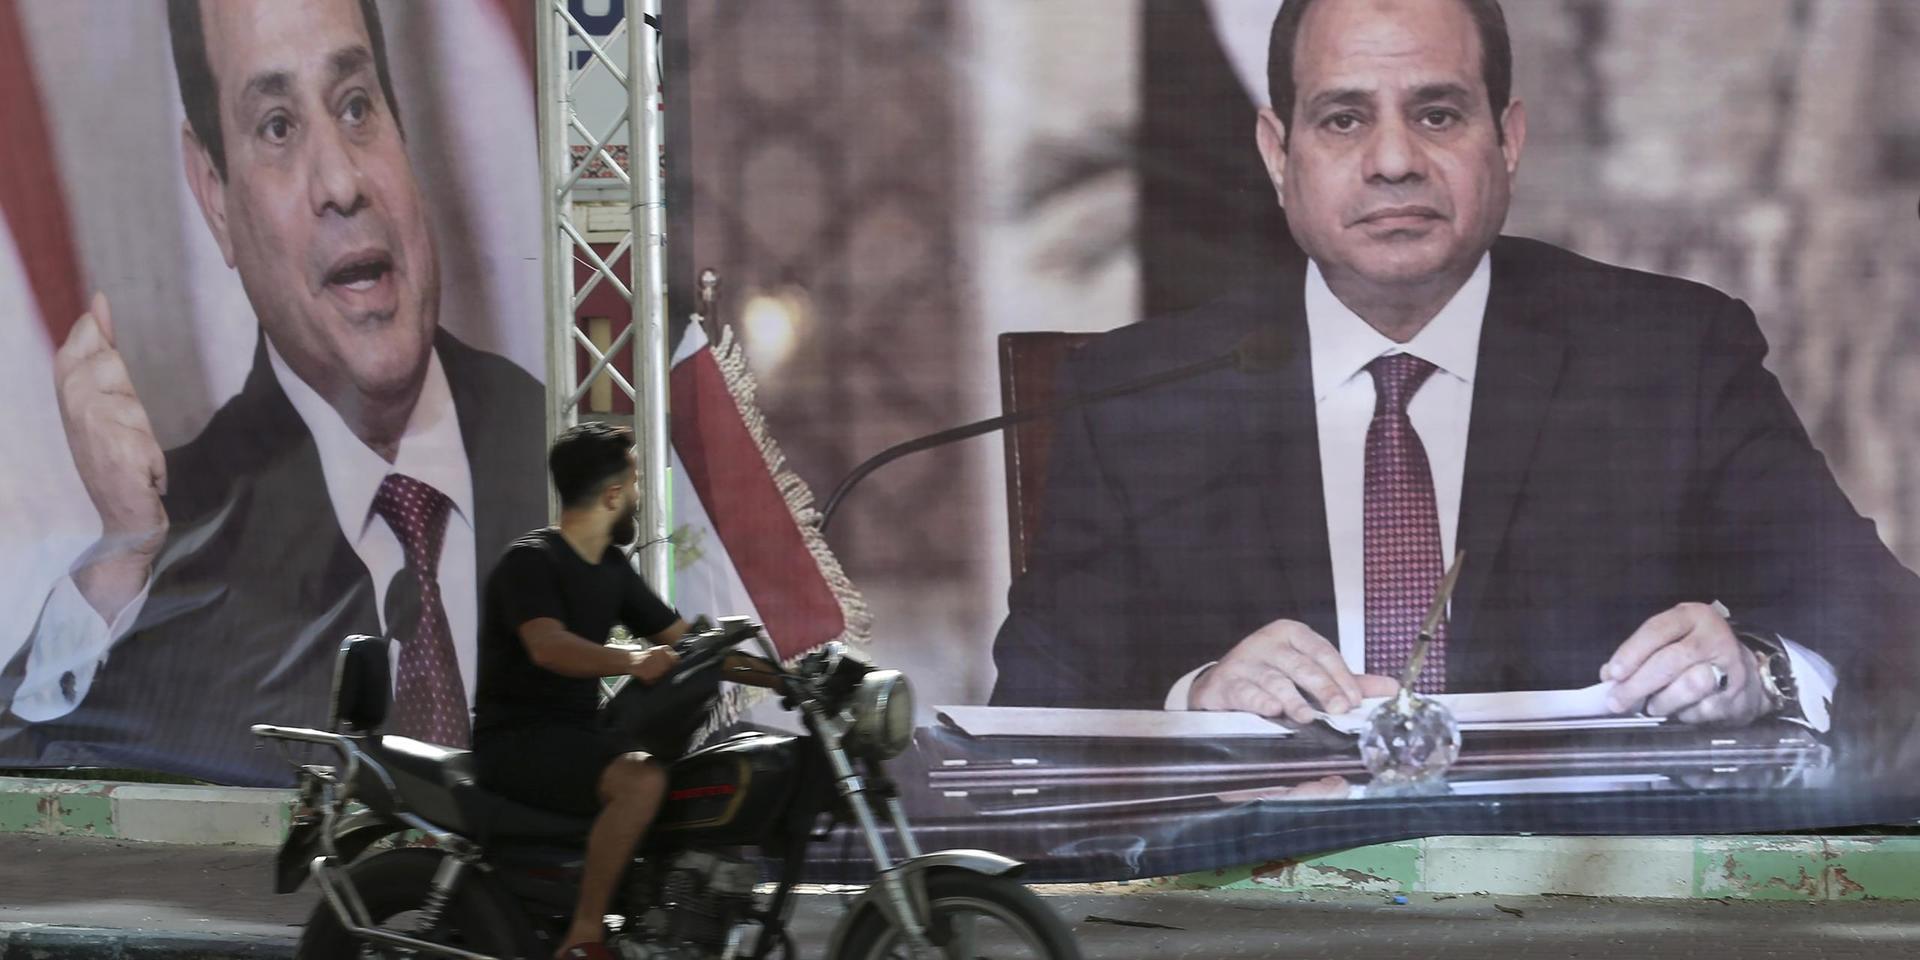 Bilder på Egyptens president Abd al-Fattah al-Sisi pryder Gazas gator.